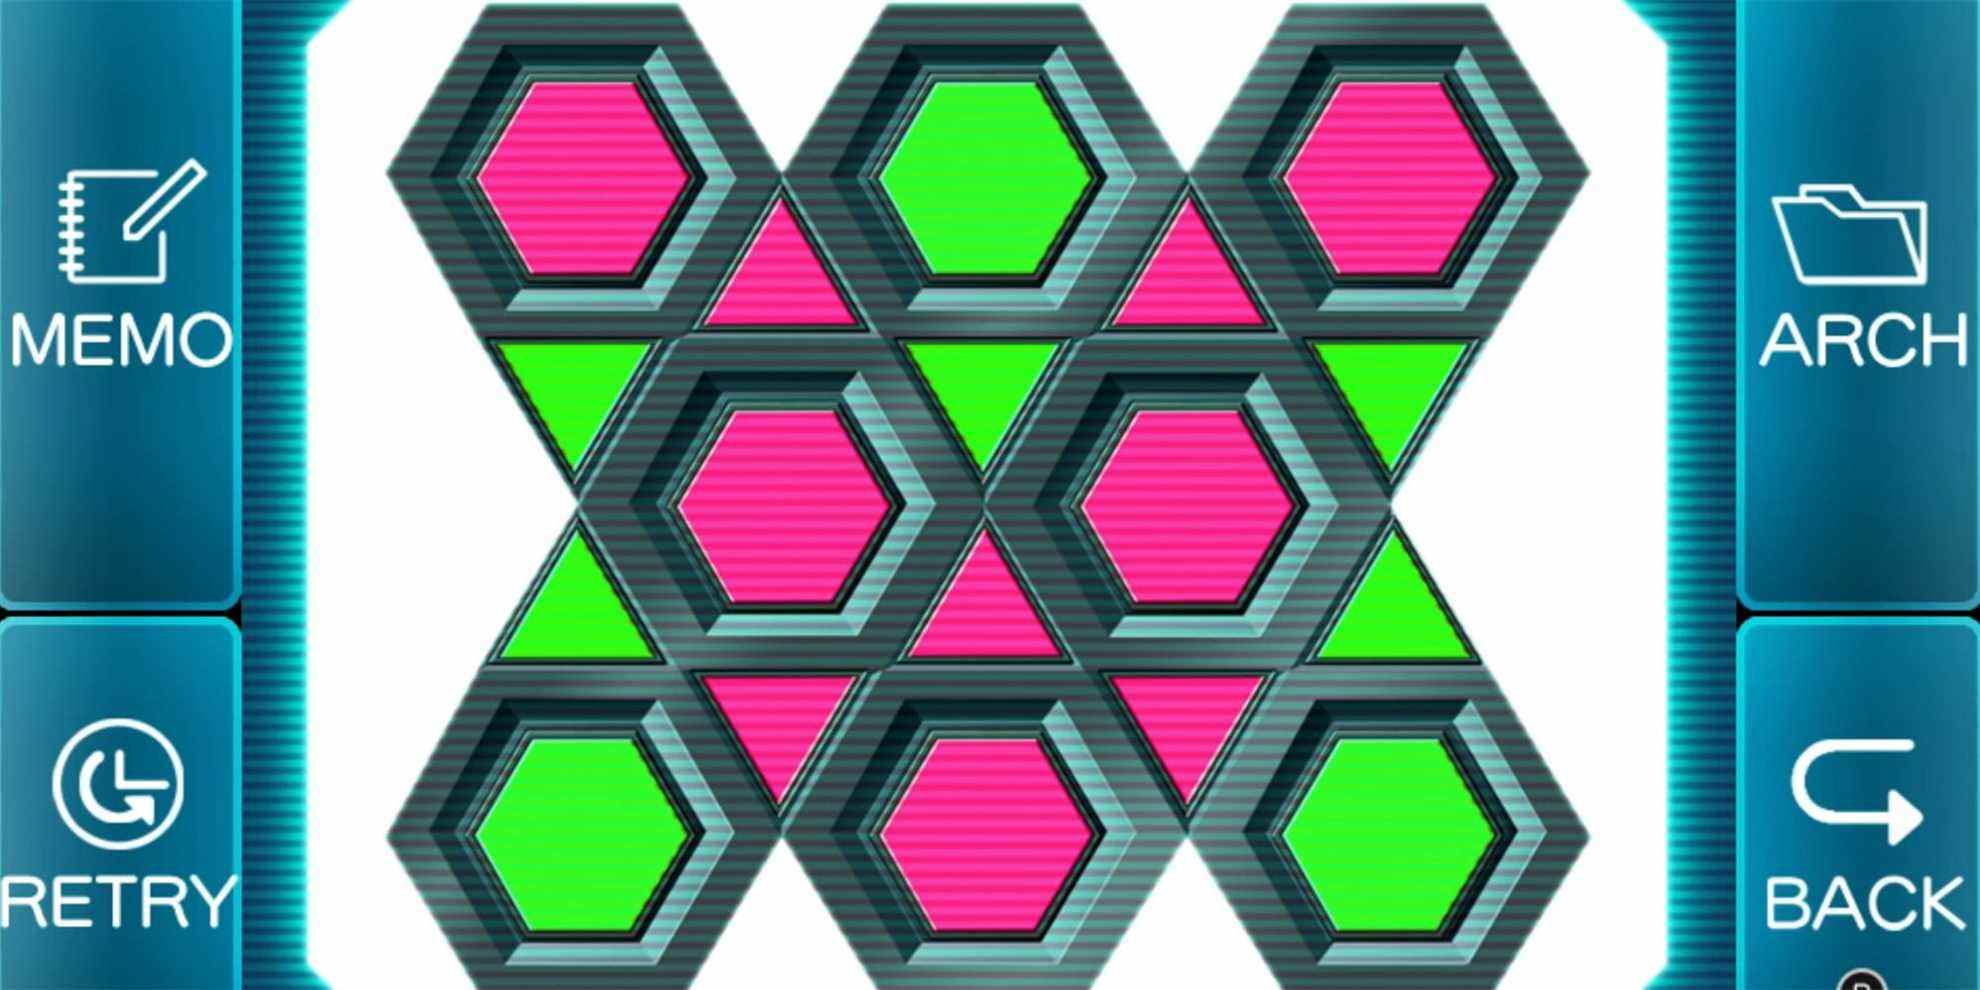 q salle hexagone et mini-jeu triangle